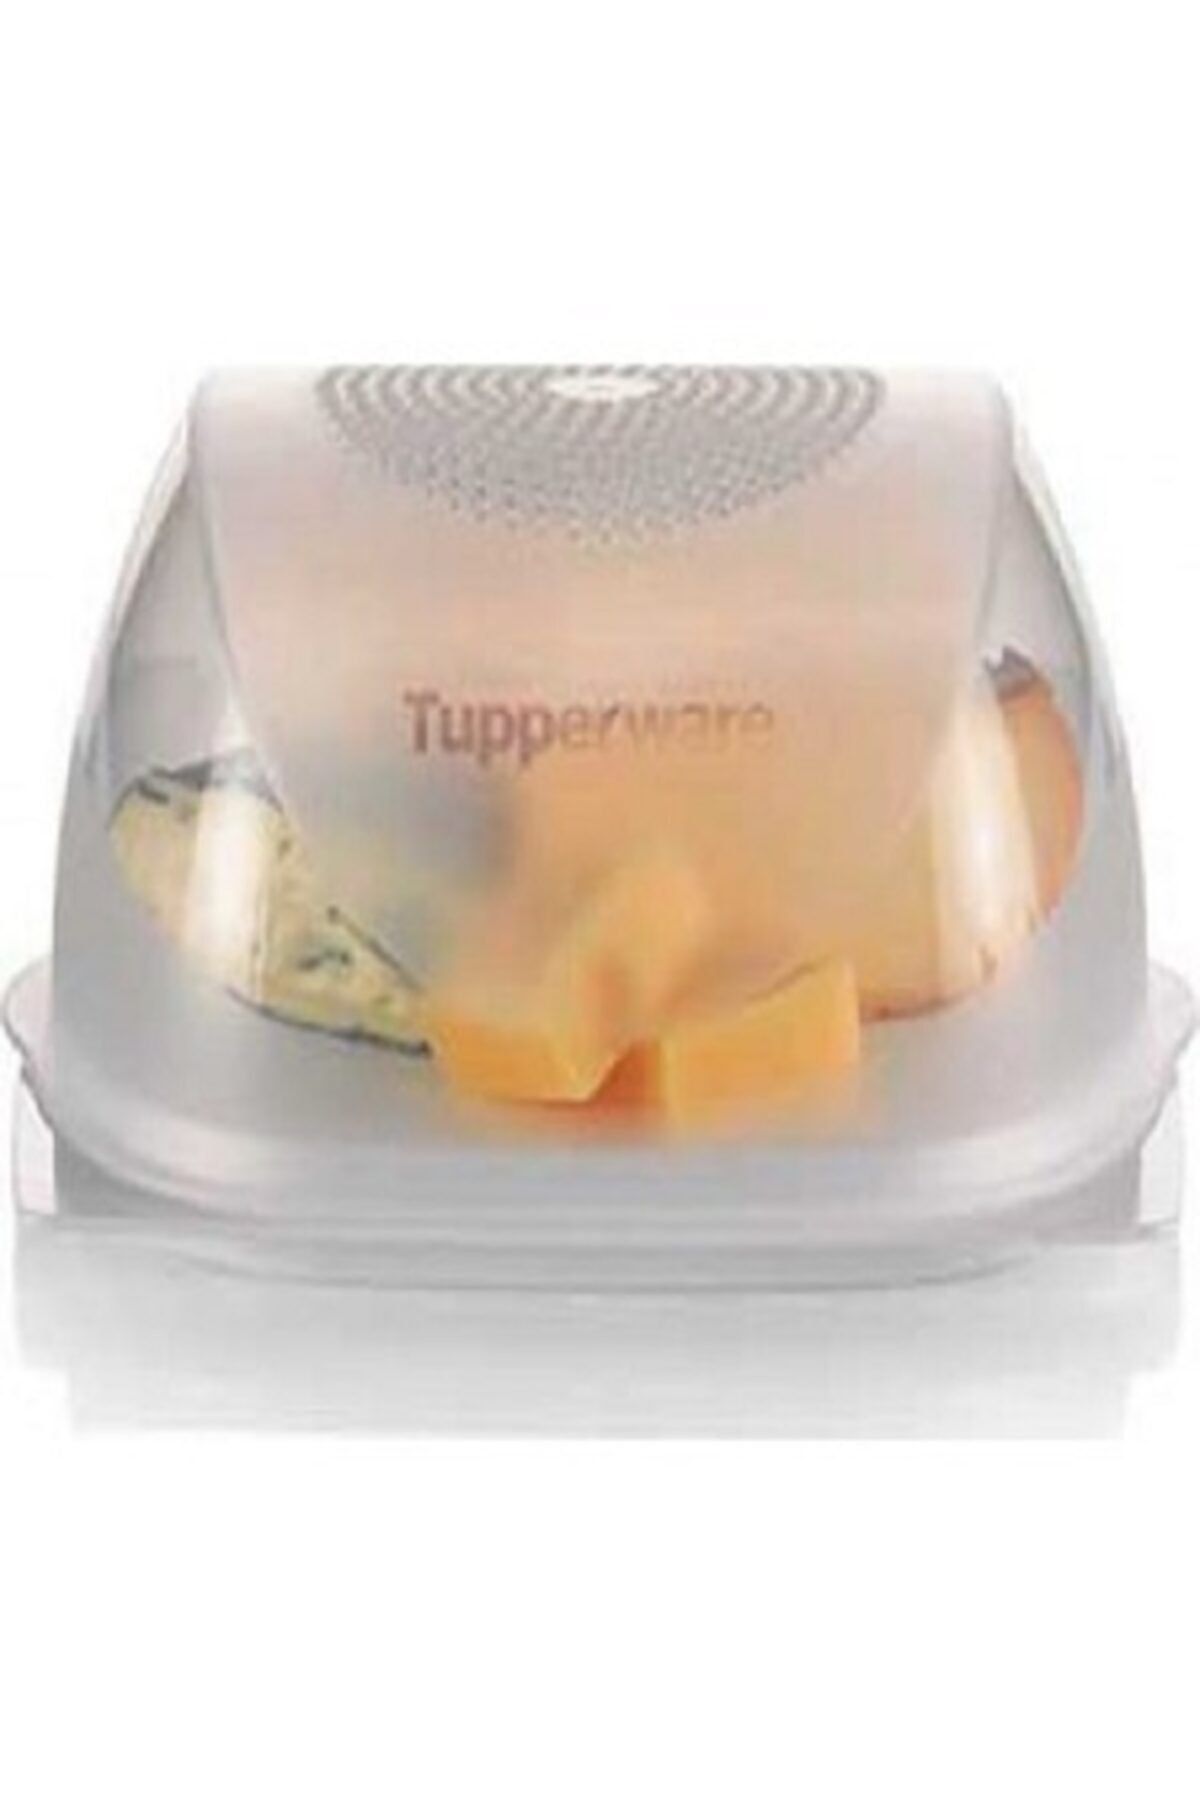 Tupperware Orta Peynir Dünyası